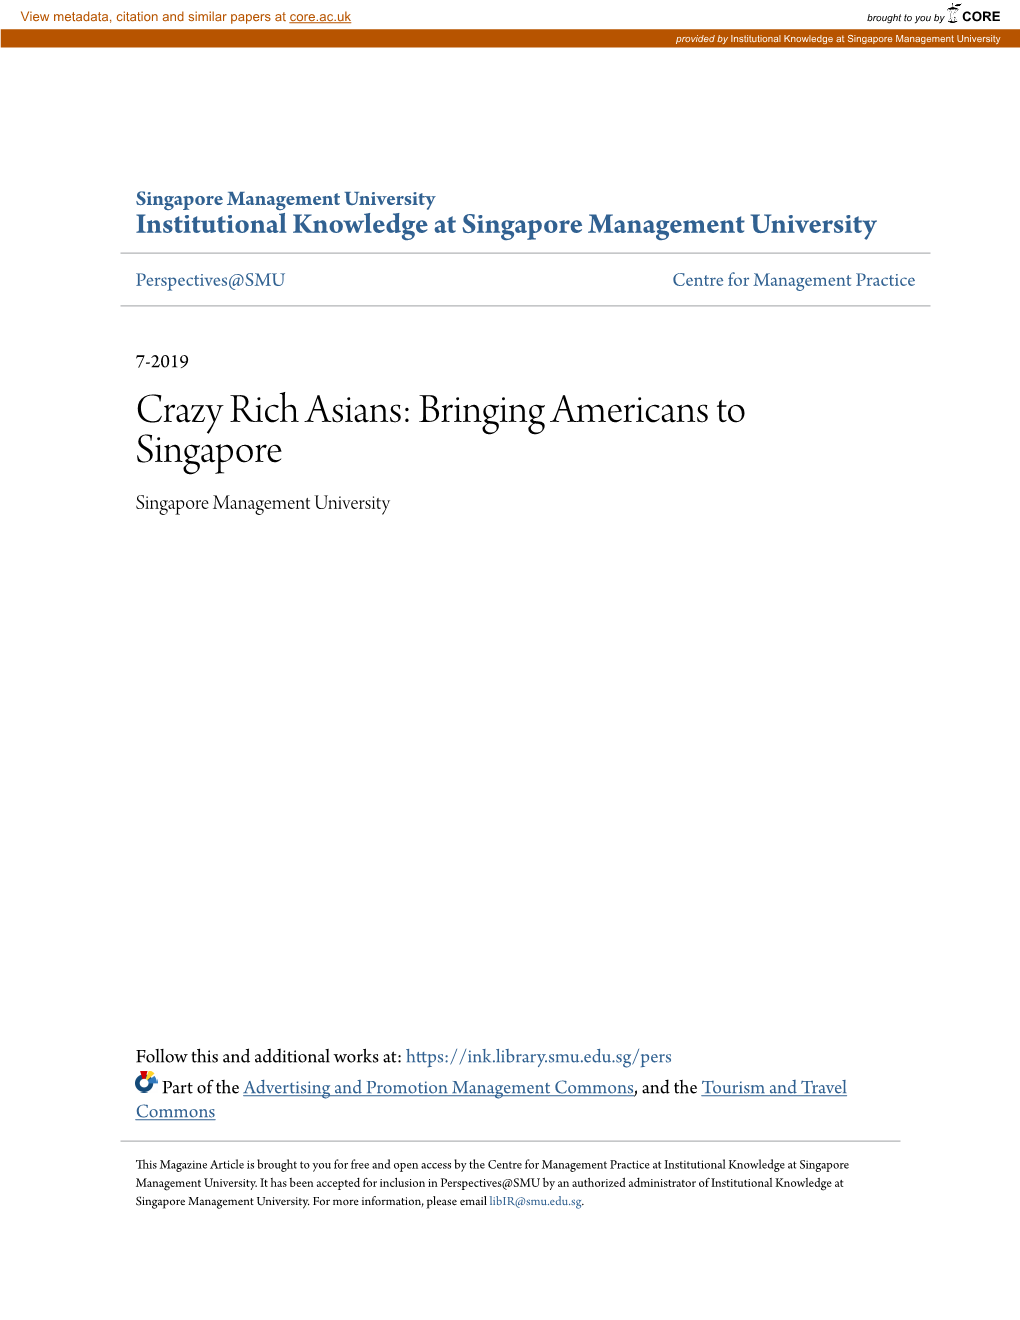 Crazy Rich Asians: Bringing Americans to Singapore Singapore Management University